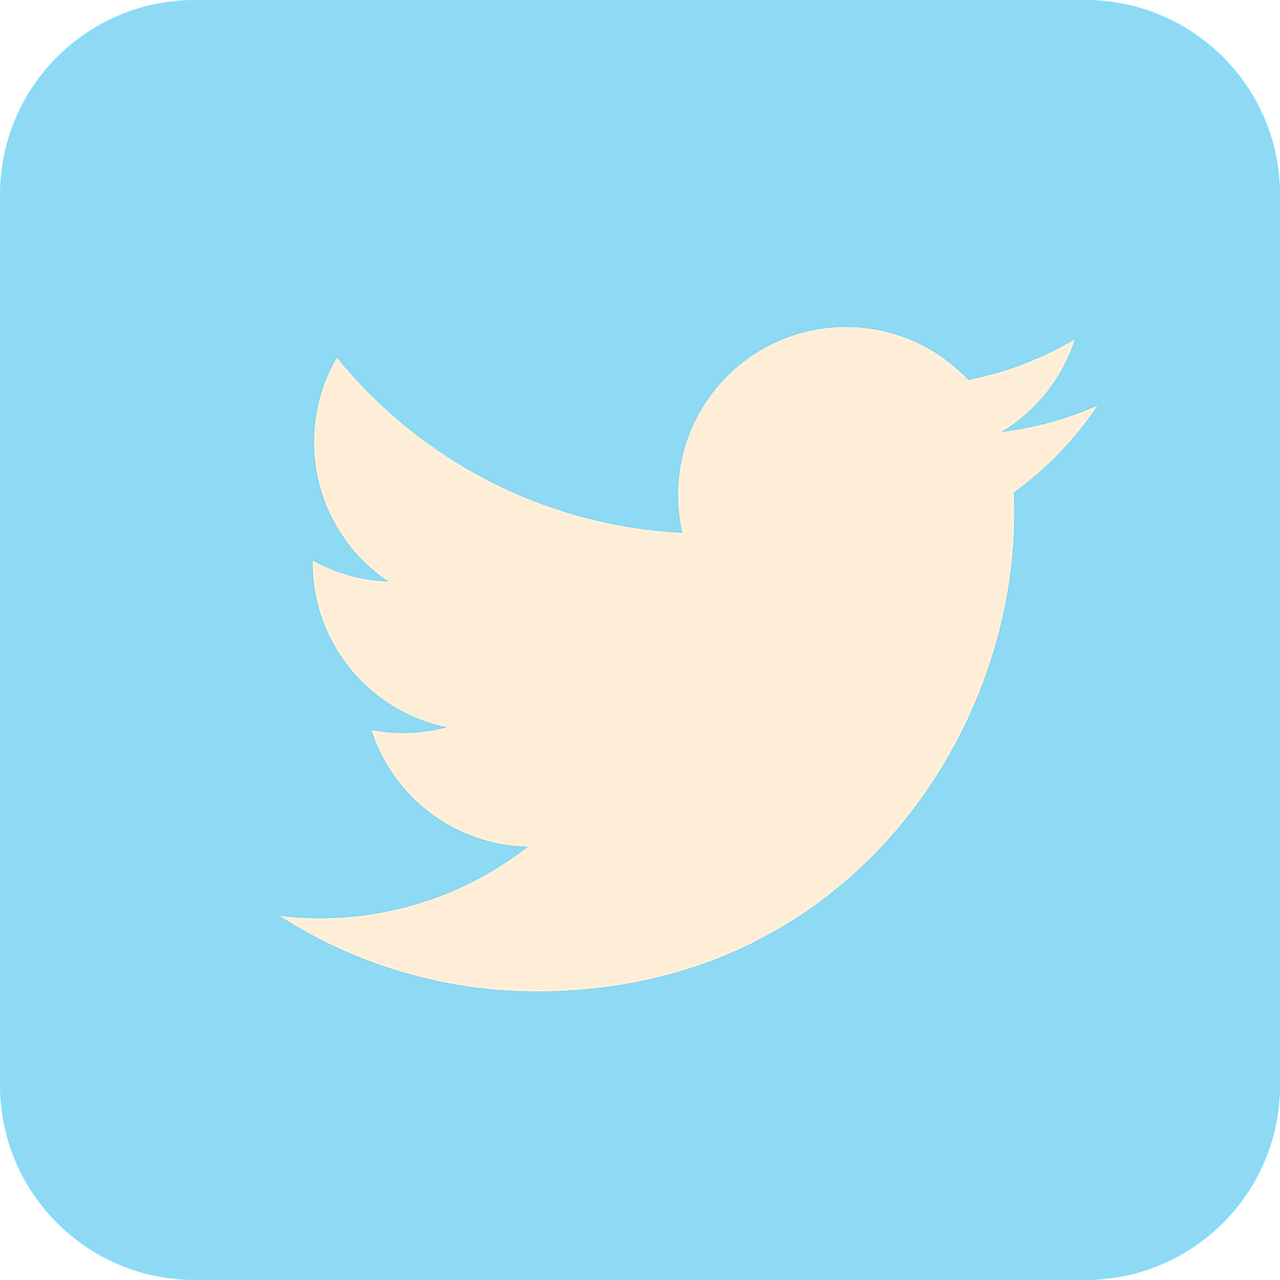 Icons Media Twitter Computer Social Logo PNG Image